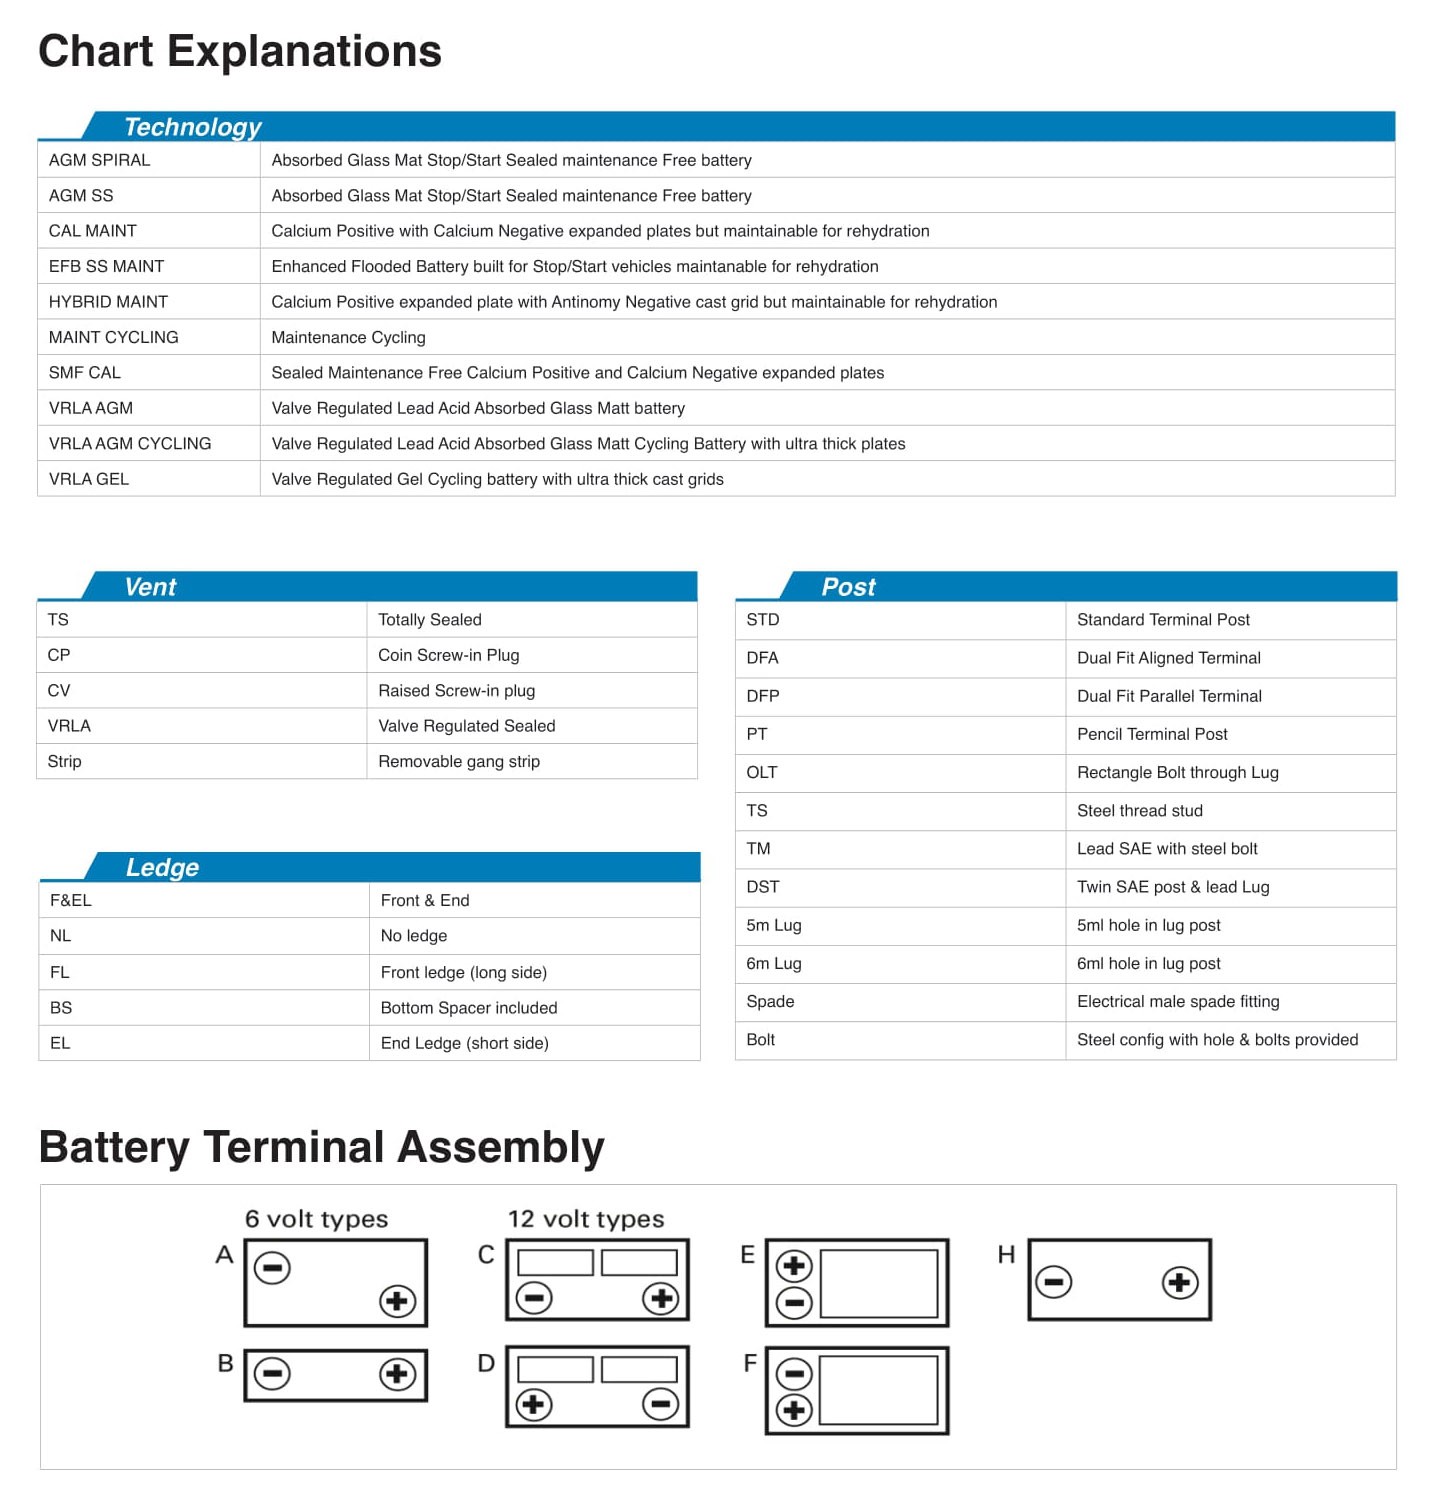 Battery assembly image